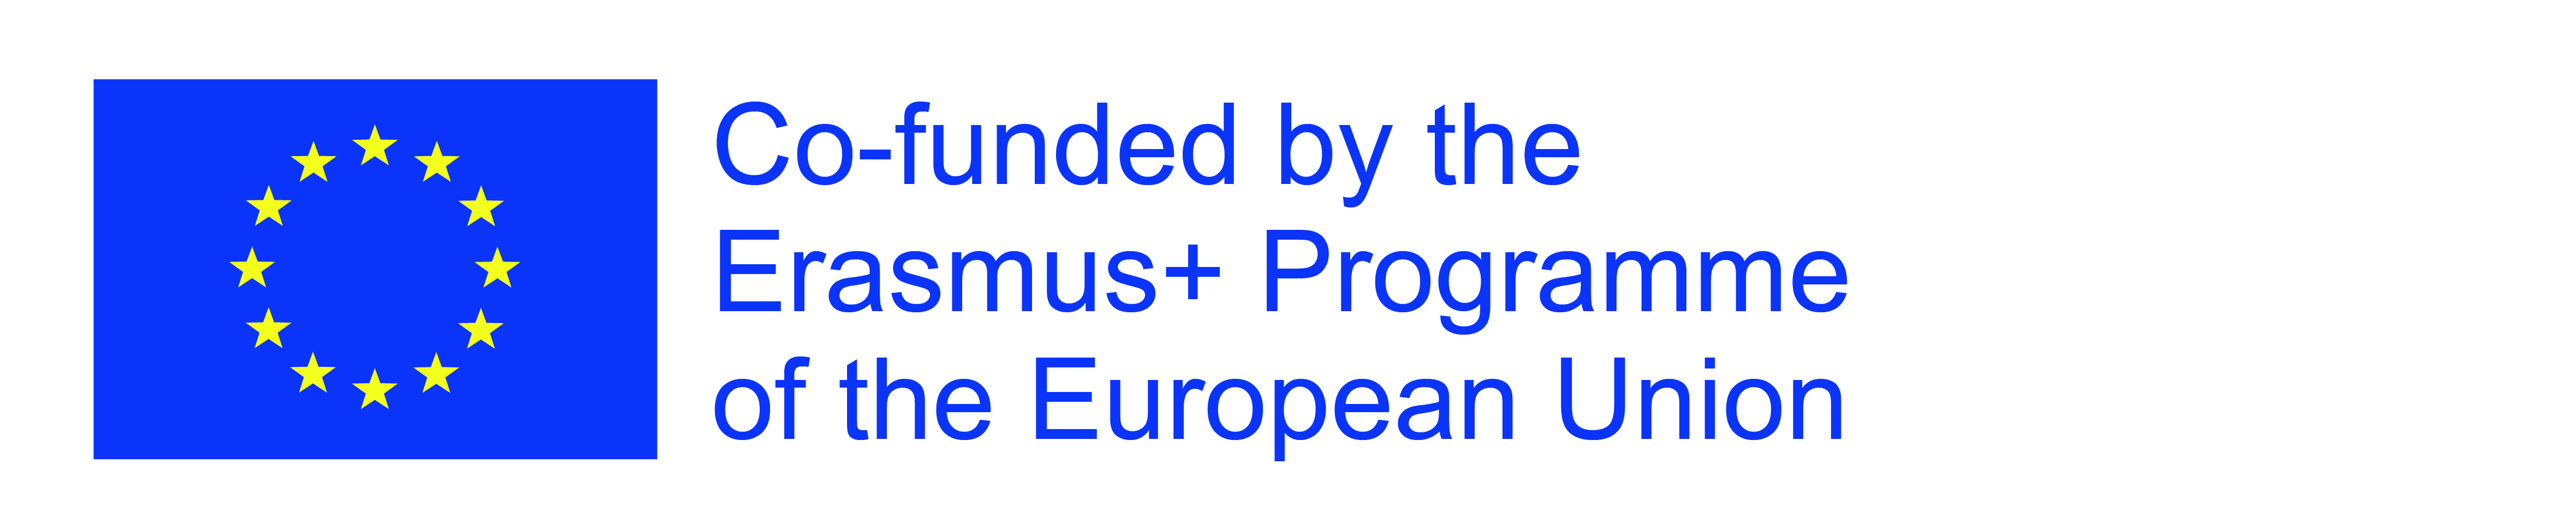 Erasmus+ logo90.jpg